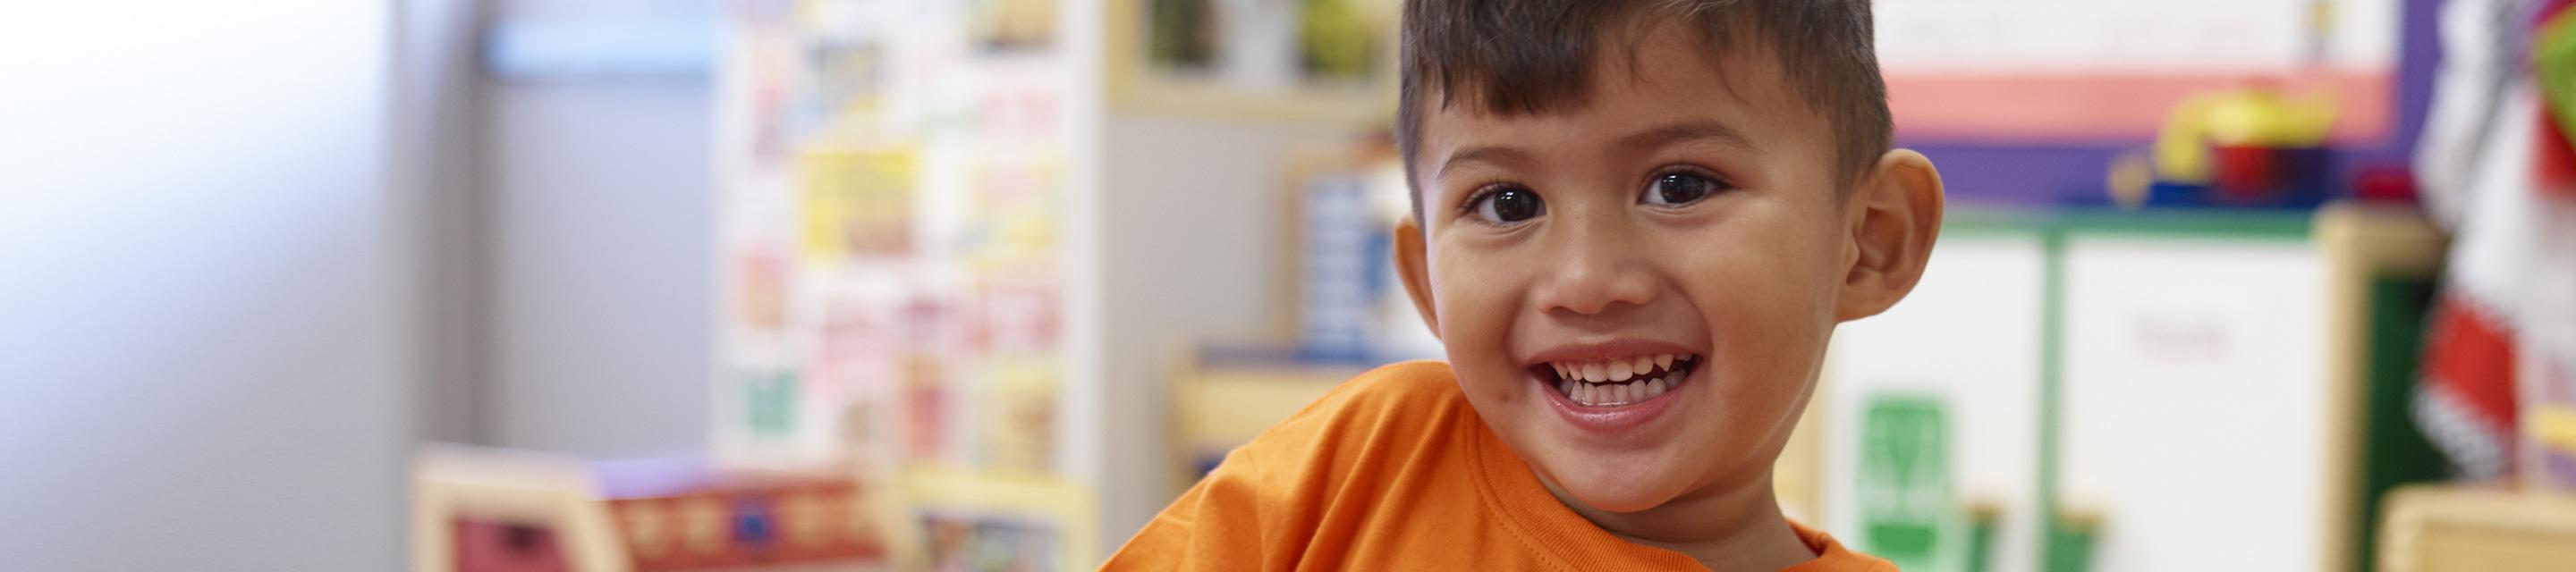 Young boy wearing an orange shirt, in a classroom, smiling to camera 